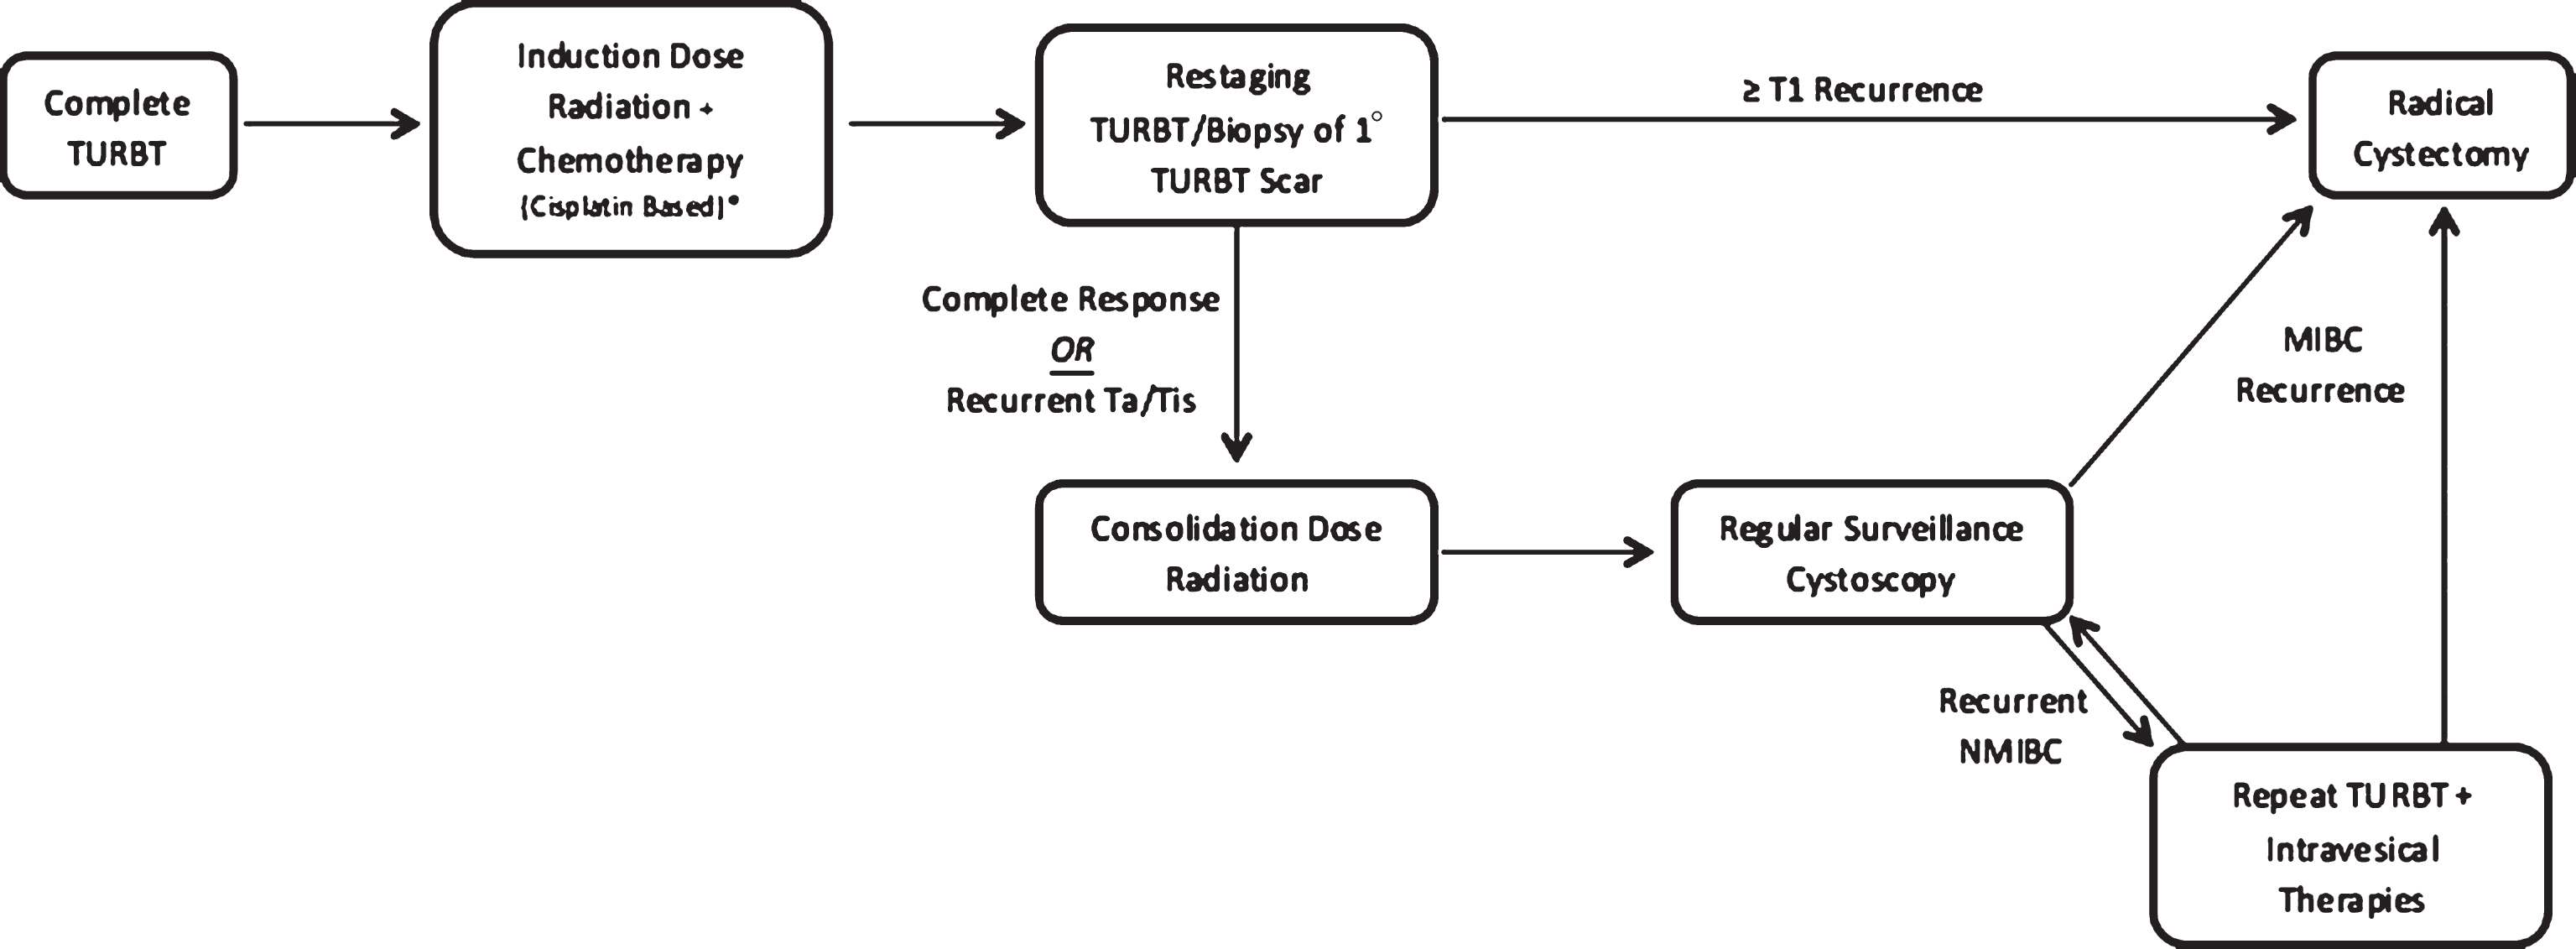 Pictographic representation of continuous-course trimodal therapy regimen.